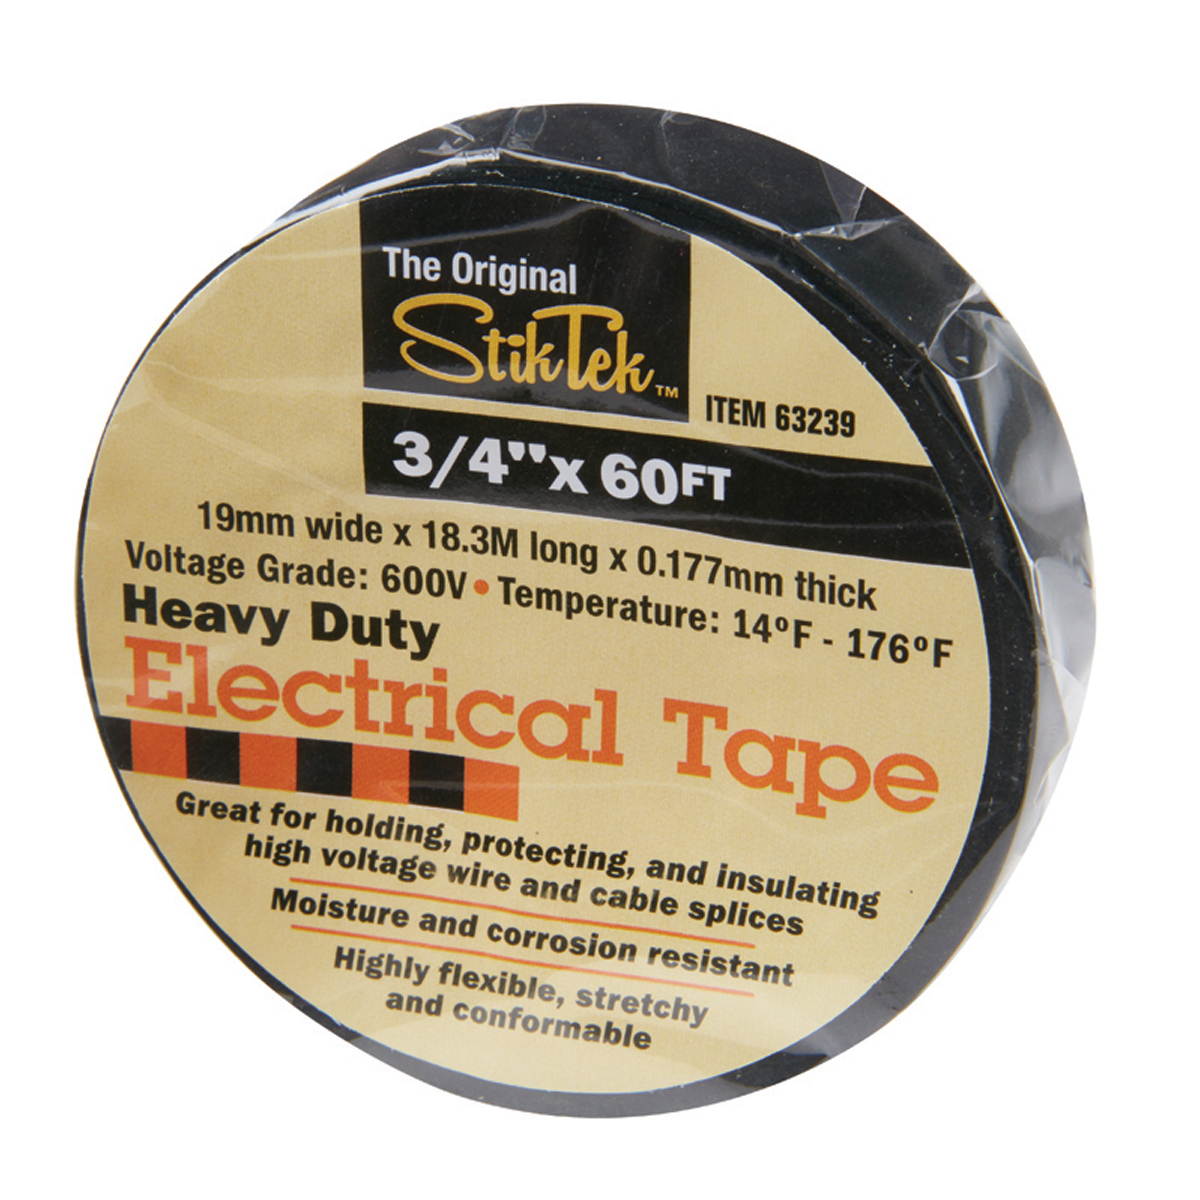 STIKTEK 3/4 in x 60 Ft Industrial Grade Electrical Tape - Item 63239